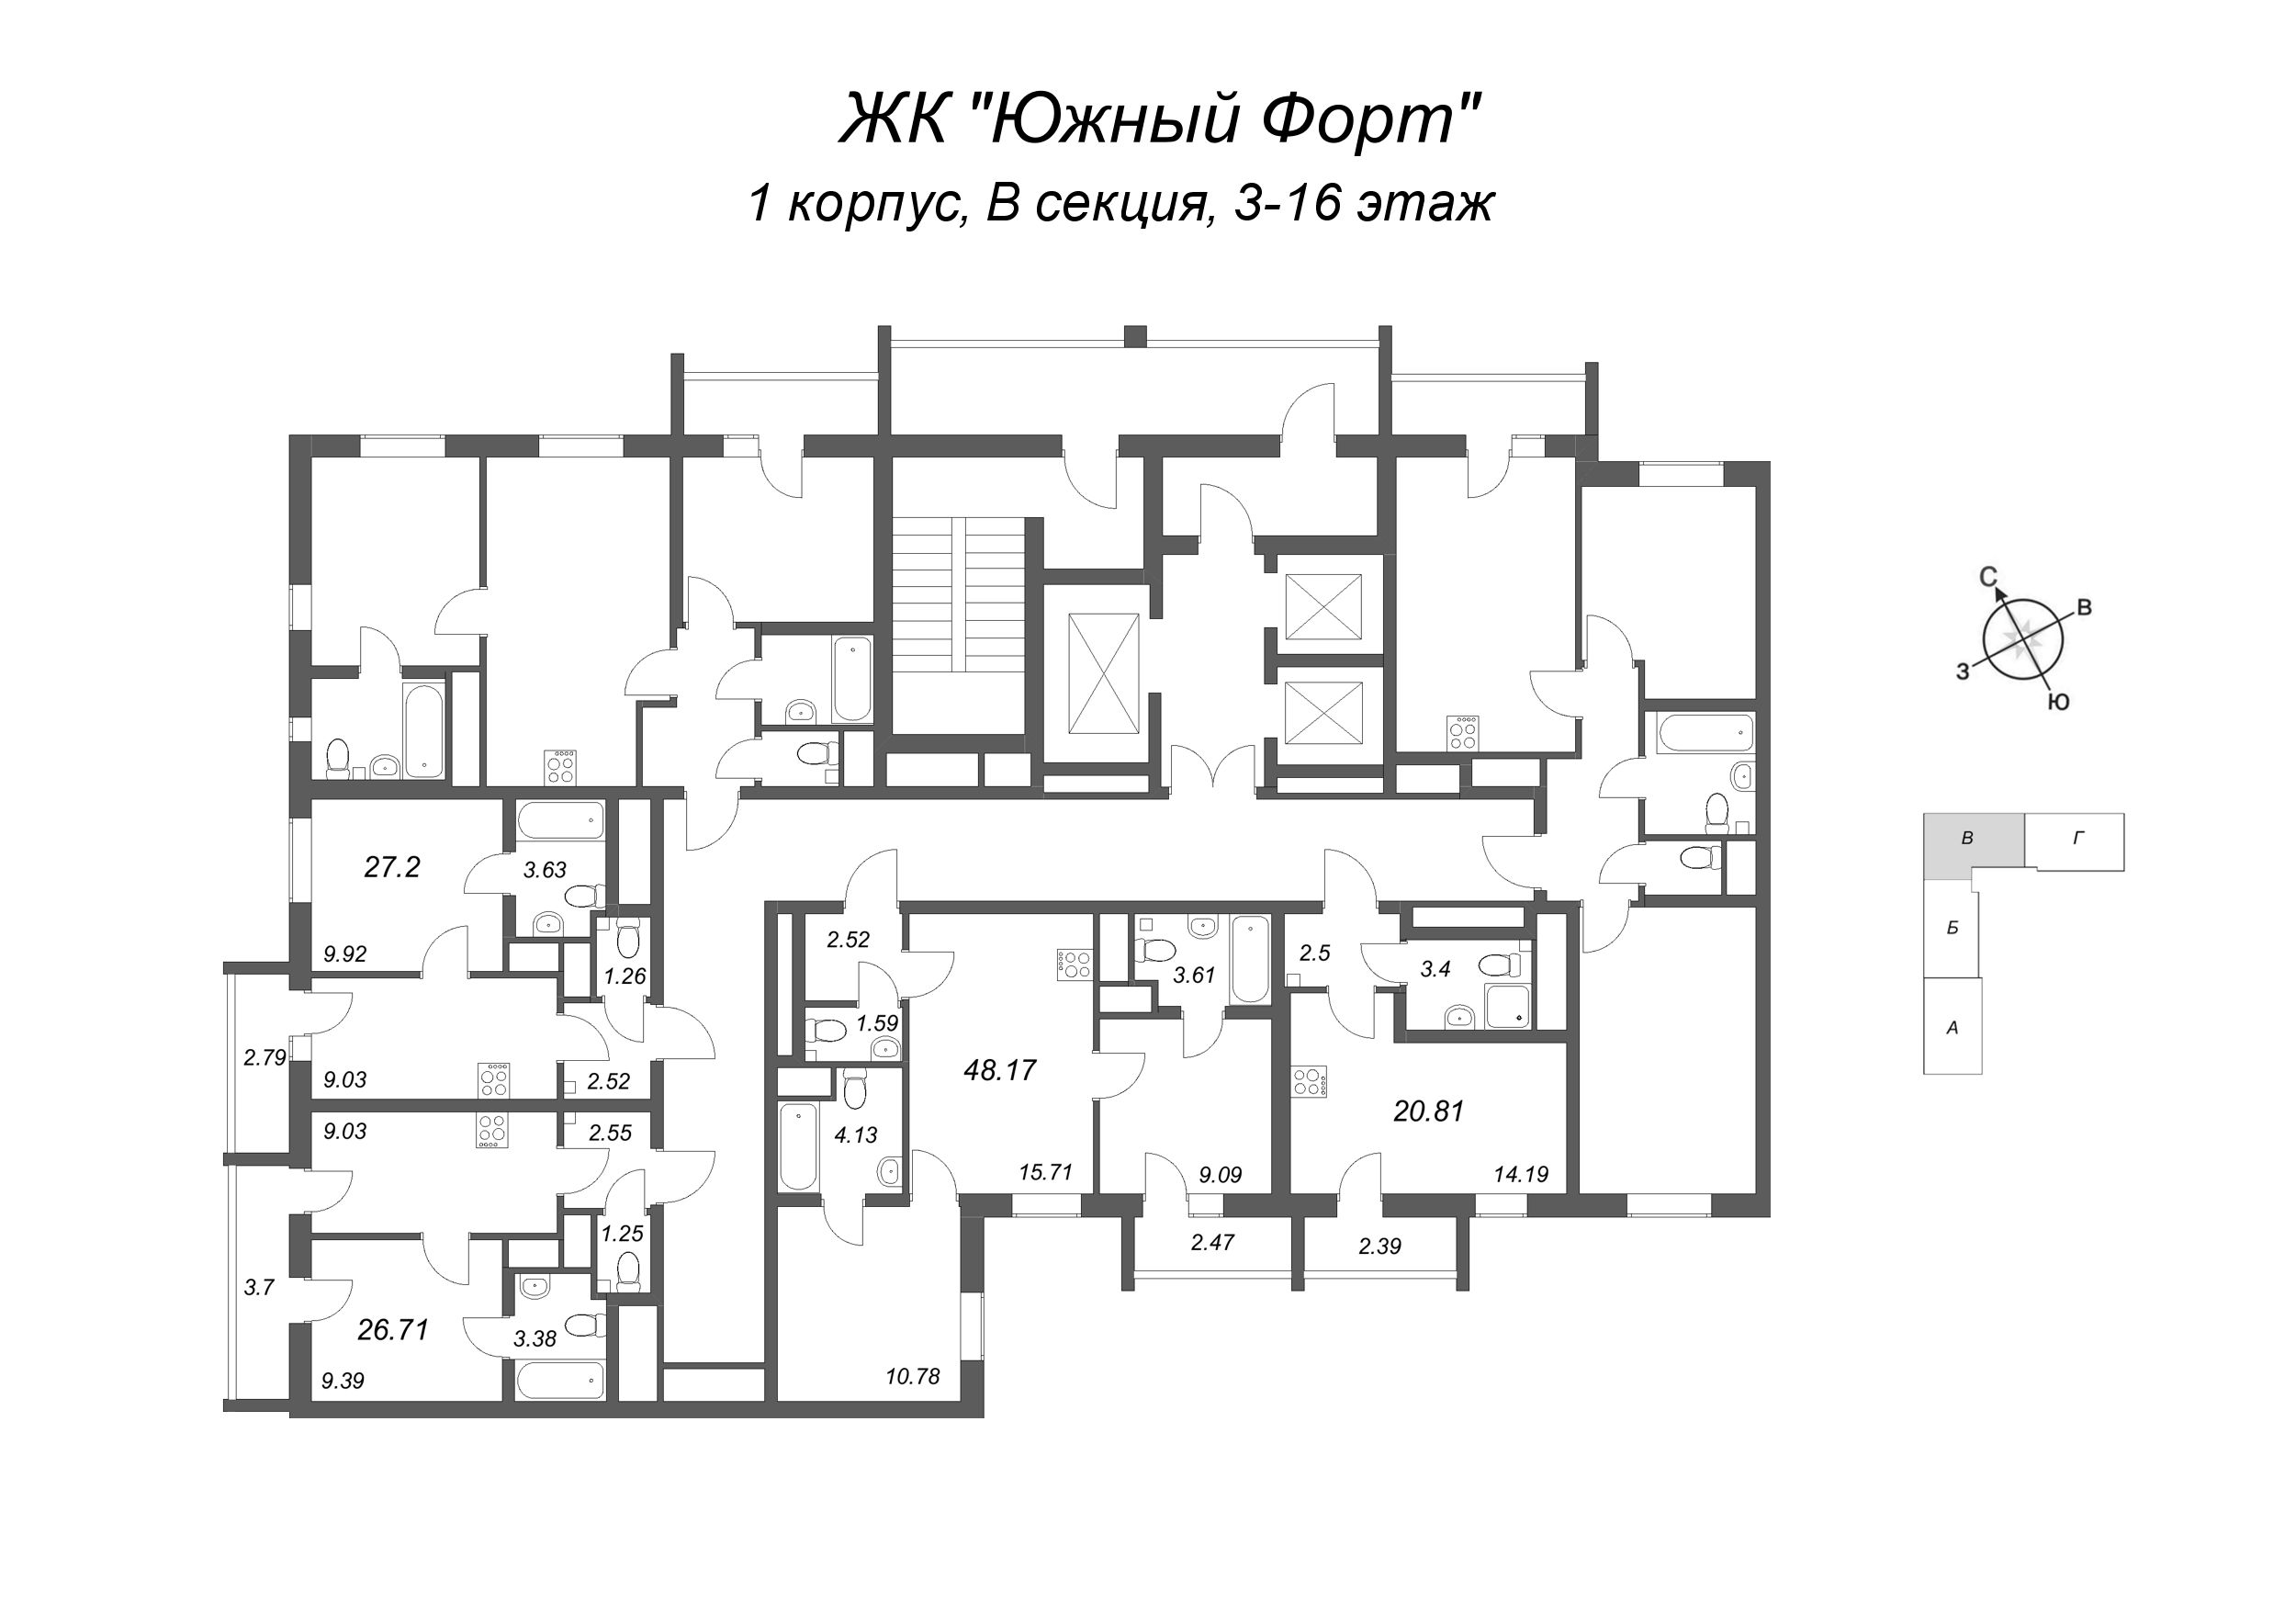 3-комнатная (Евро) квартира, 48.17 м² - планировка этажа